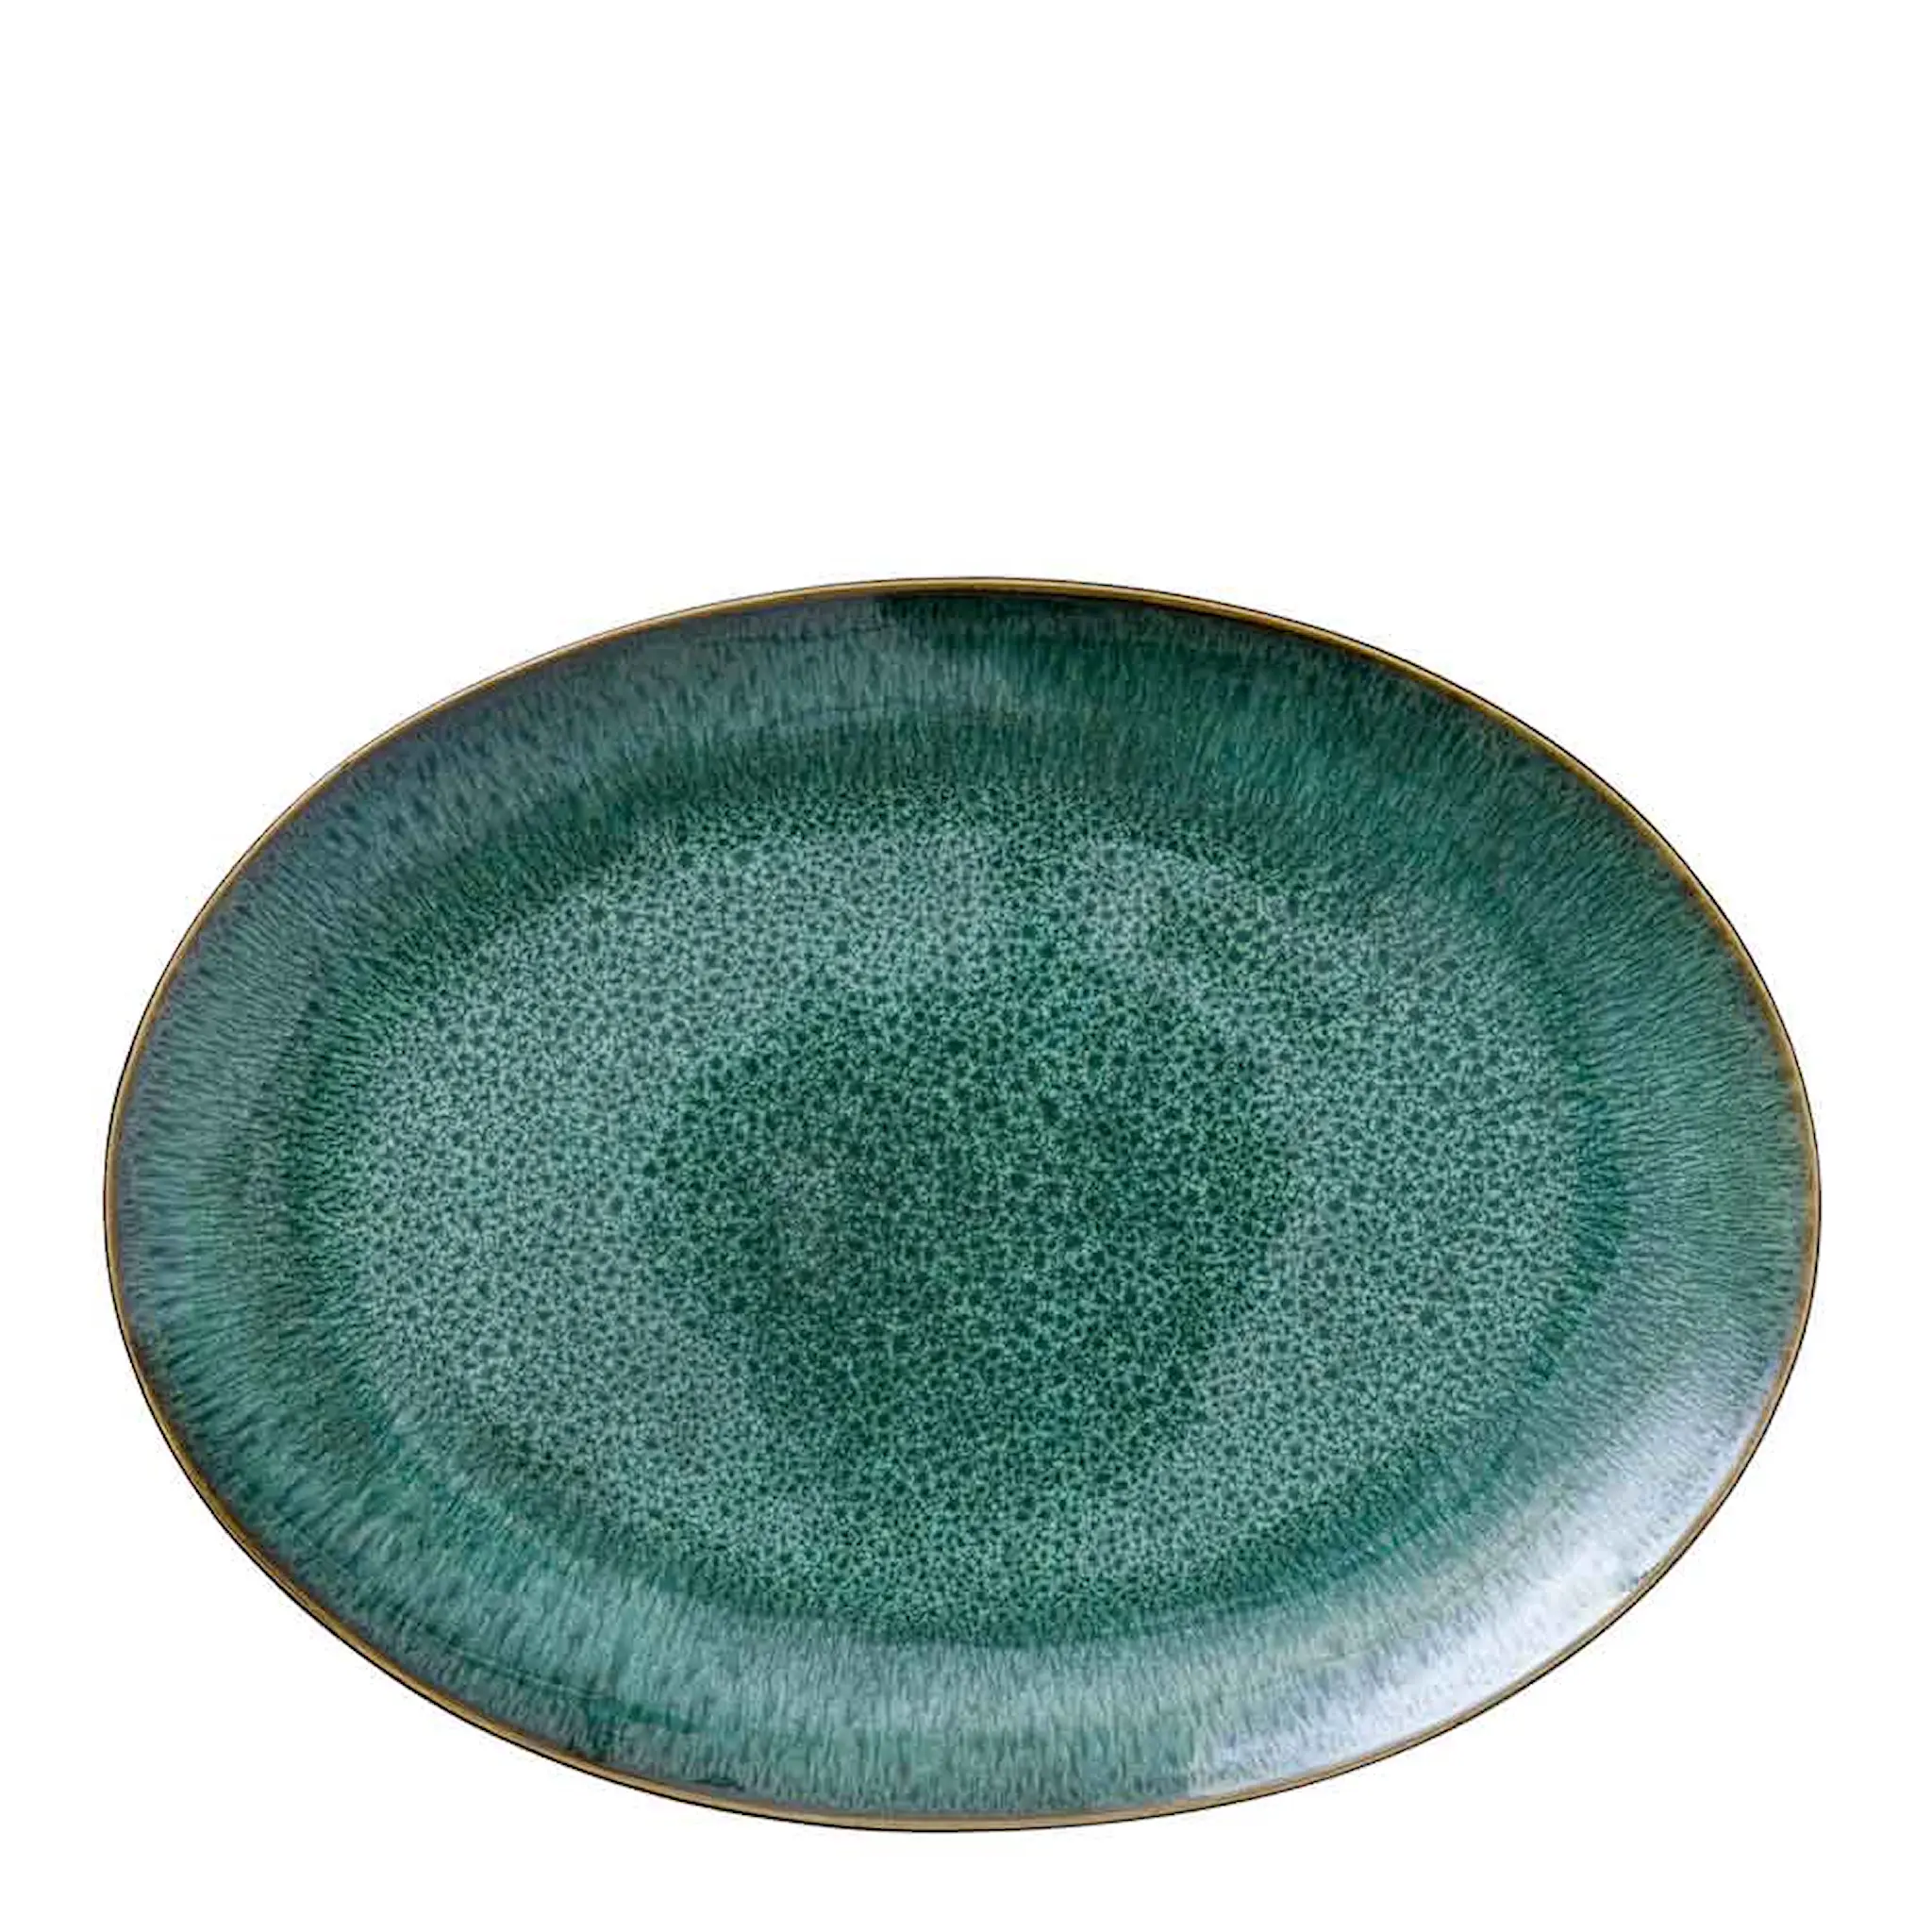 Bitz Fat ovalt 45x34 cm mørkegrønn